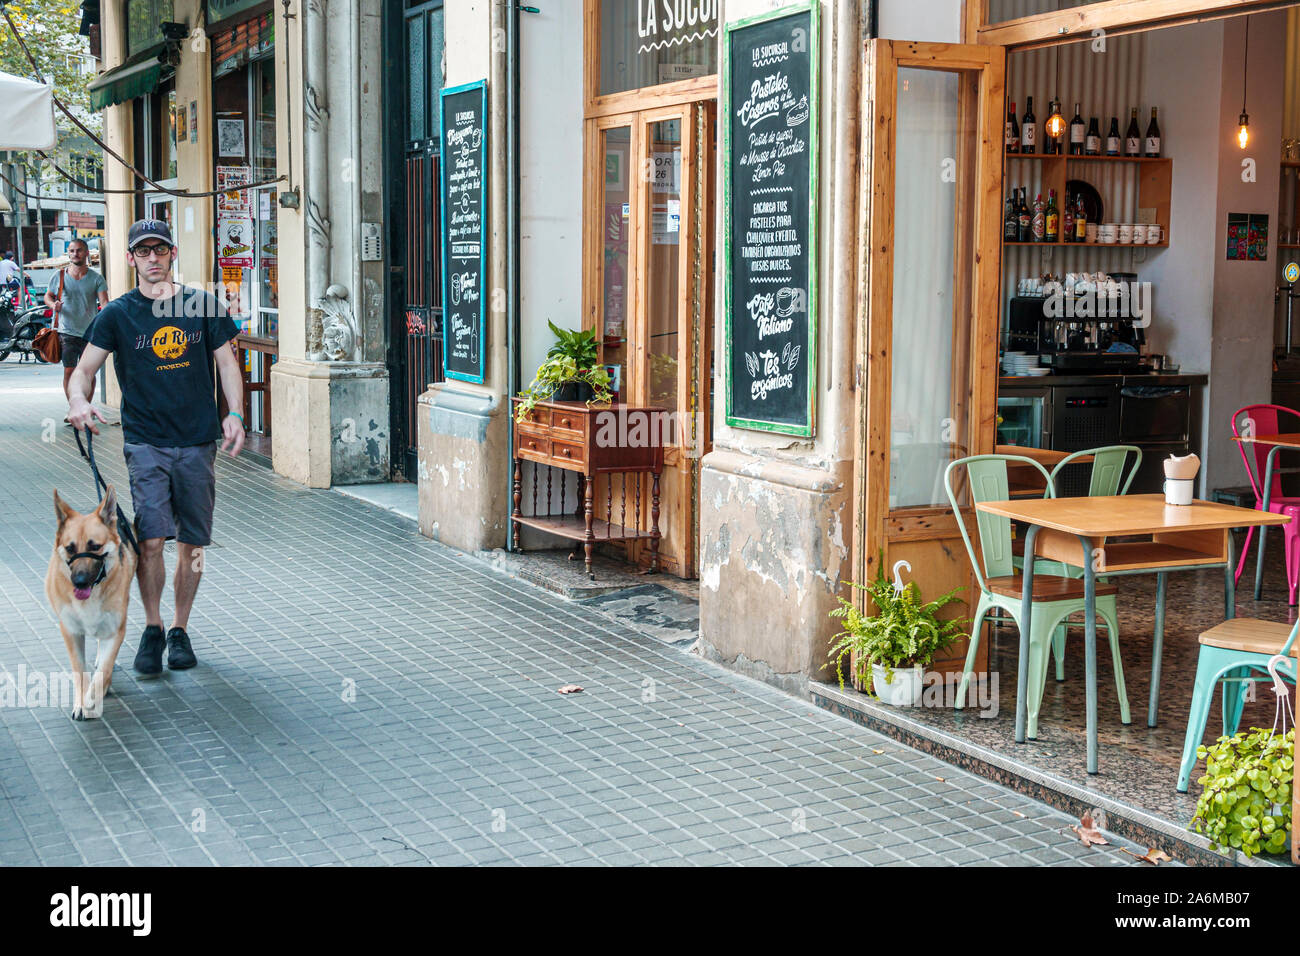 Barcelona Spain,Catalonia Sant Antoni,La Sucursal, restaurant,cafe,sidewalk,man,walking dog,muzzle,Hispanic,ES190902086 Stock Photo